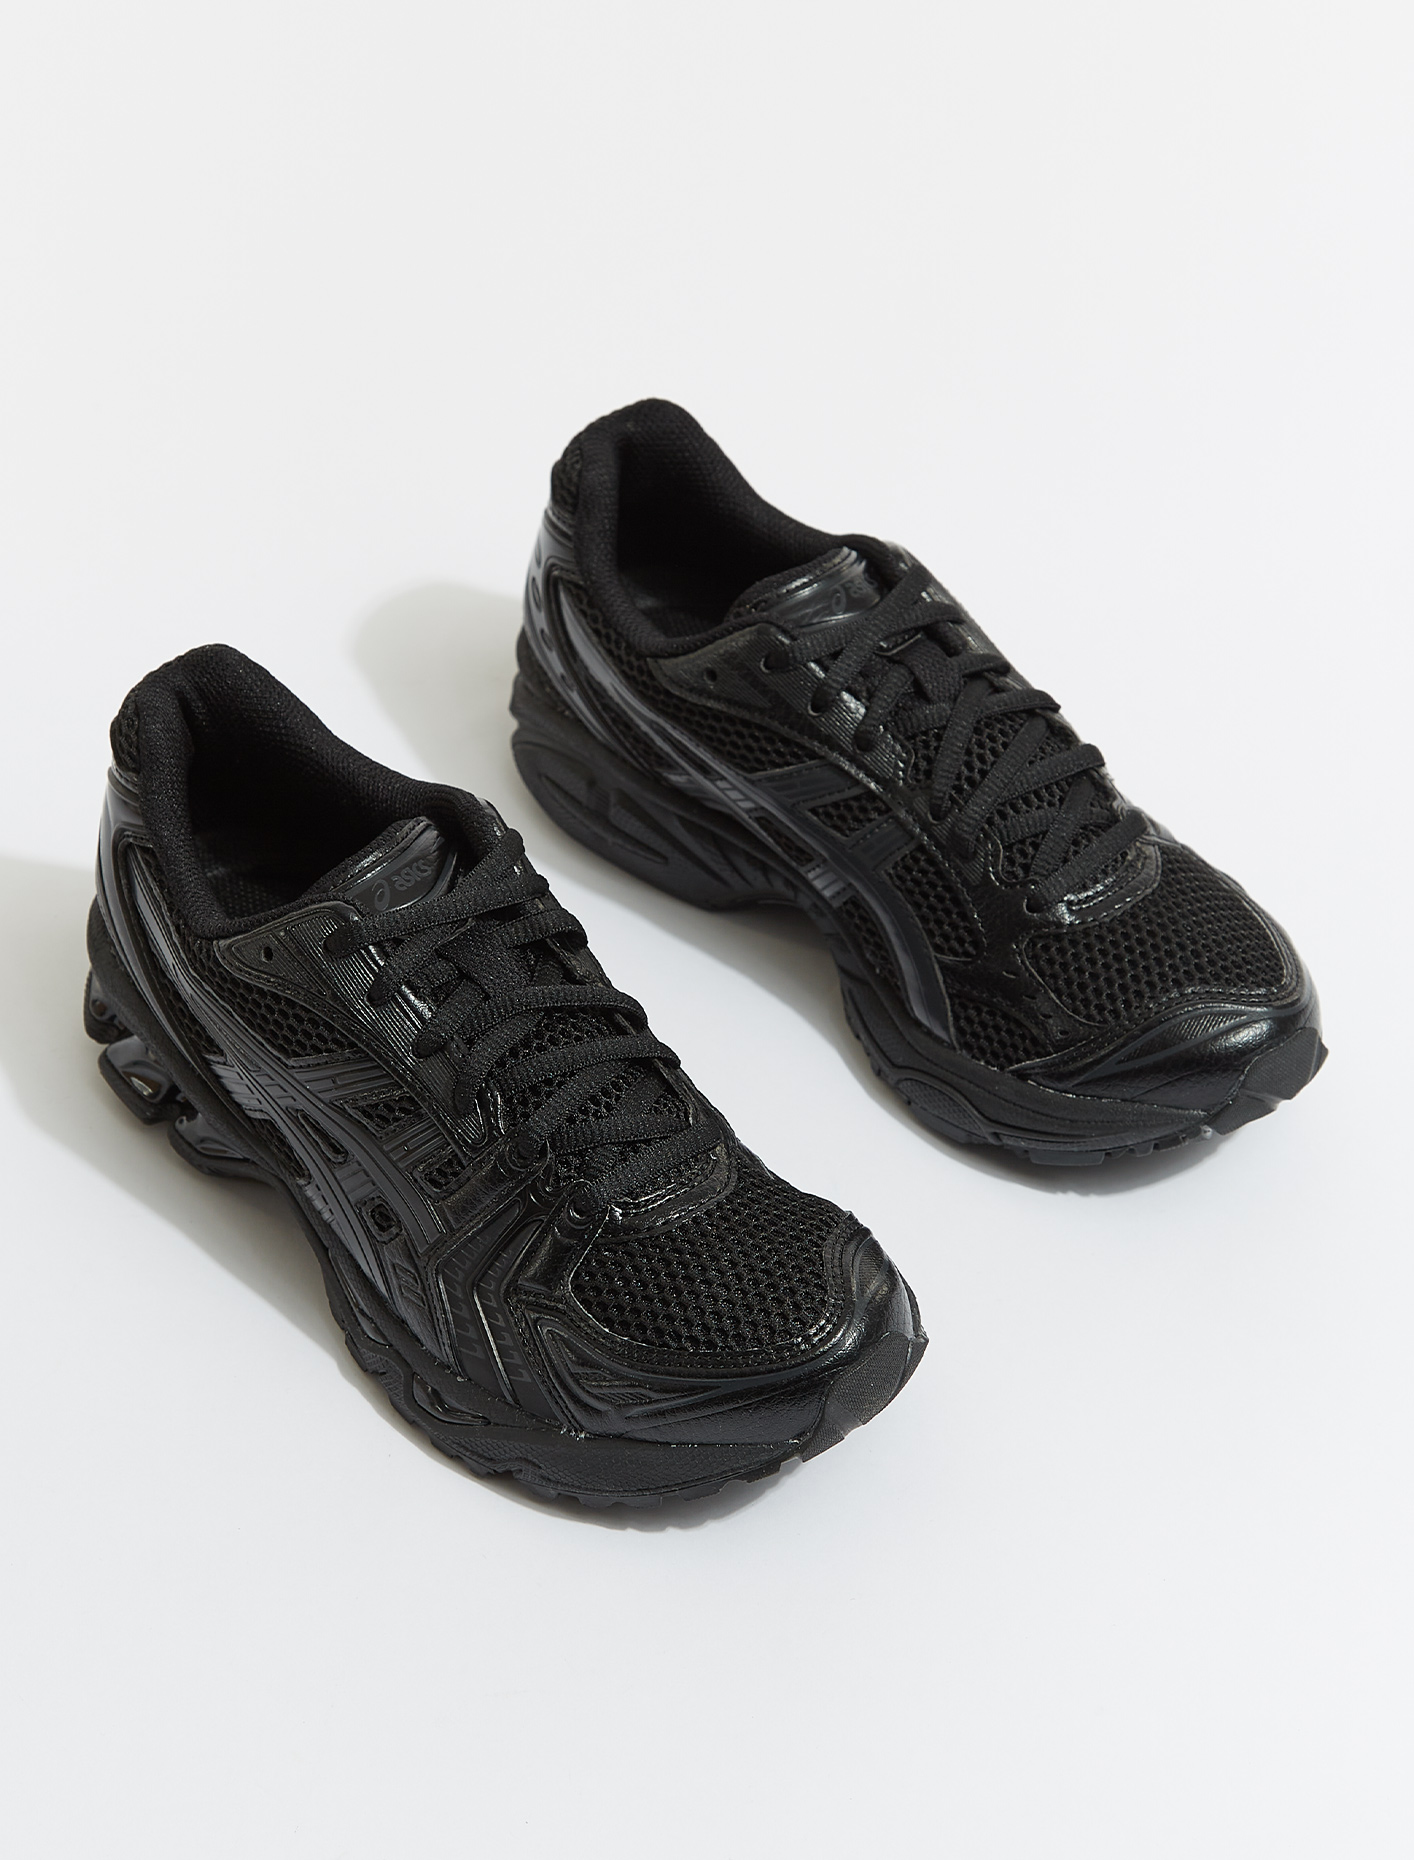 ASICS GEL-KAYANO 14 Sneaker in Black & Graphite Grey | Voo Store Berlin